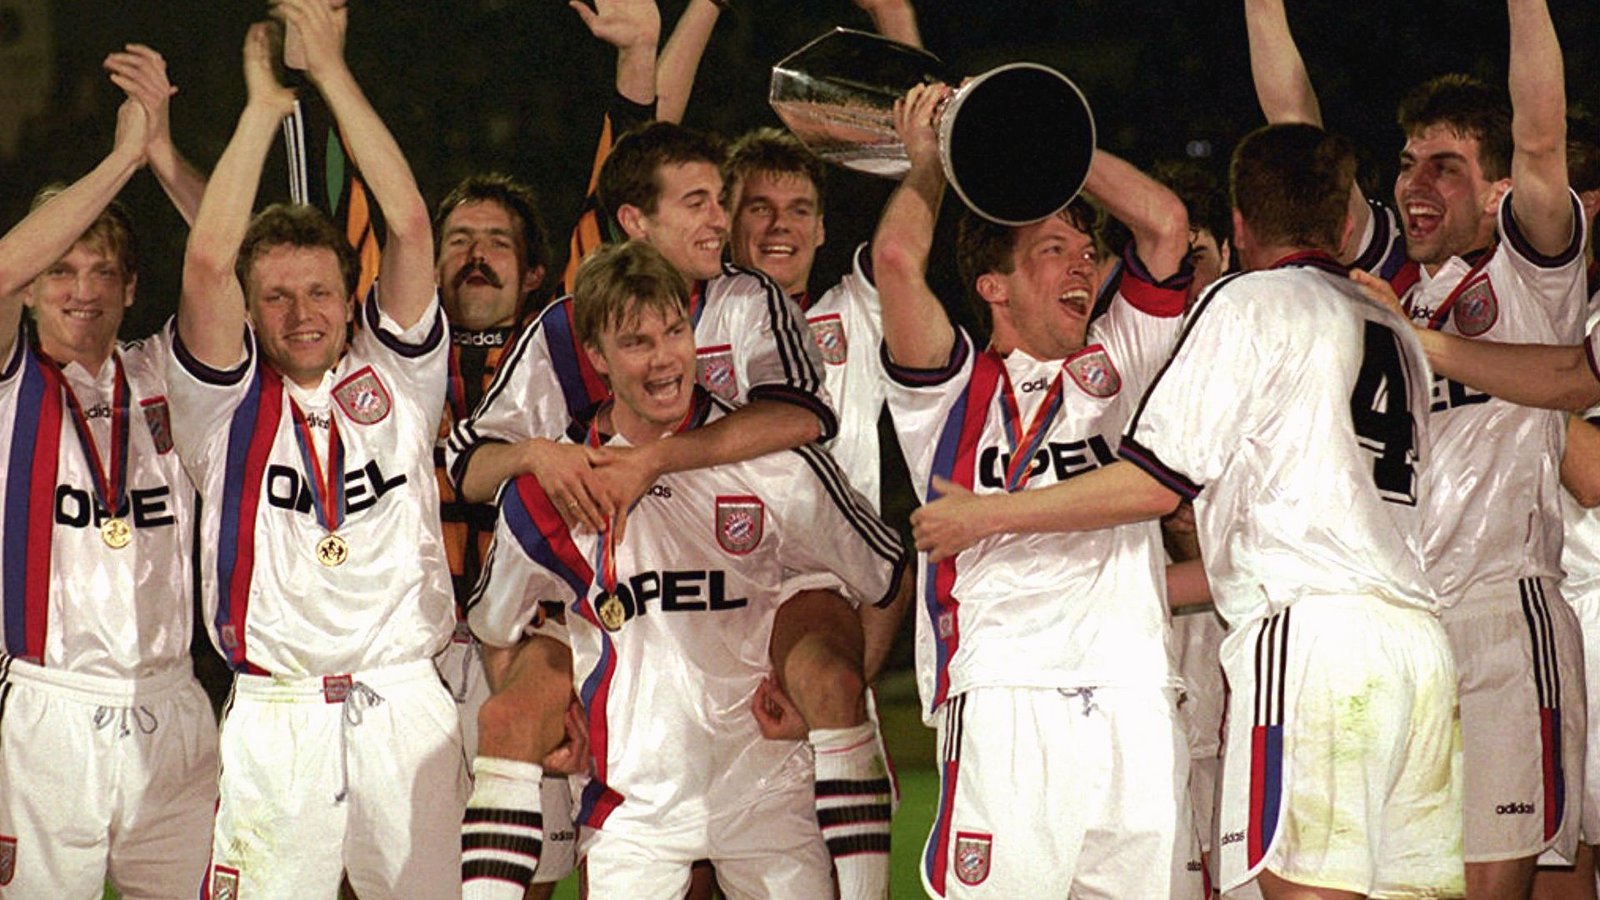 Der FC Bayern München gewann 1996 den UEFA-Pokal gegen Girondins Bordeaux.Foto: Frank Leonhardt/dpa/Archivbild